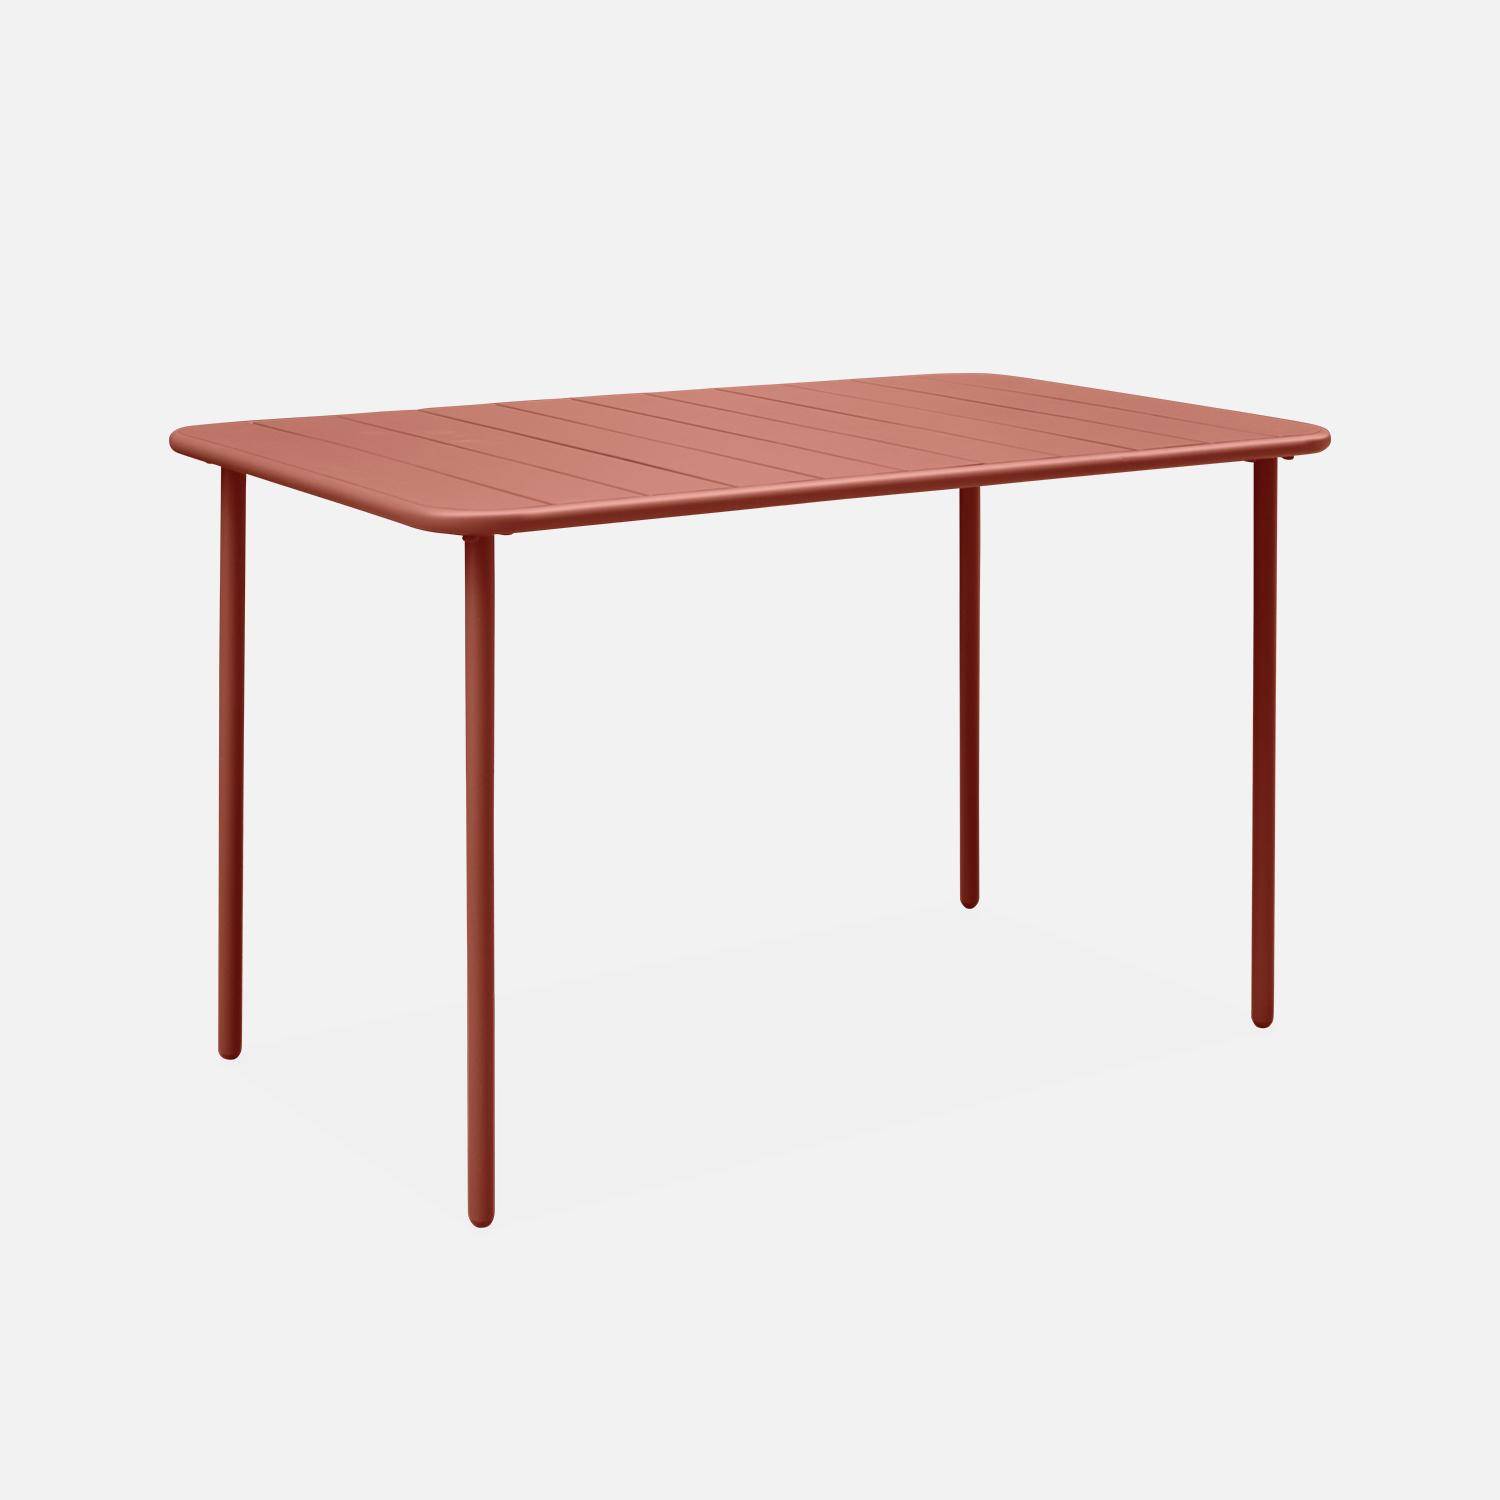 4-seater rectangular steel garden table, 120x70cm - Amelia - Terracotta,sweeek,Photo3